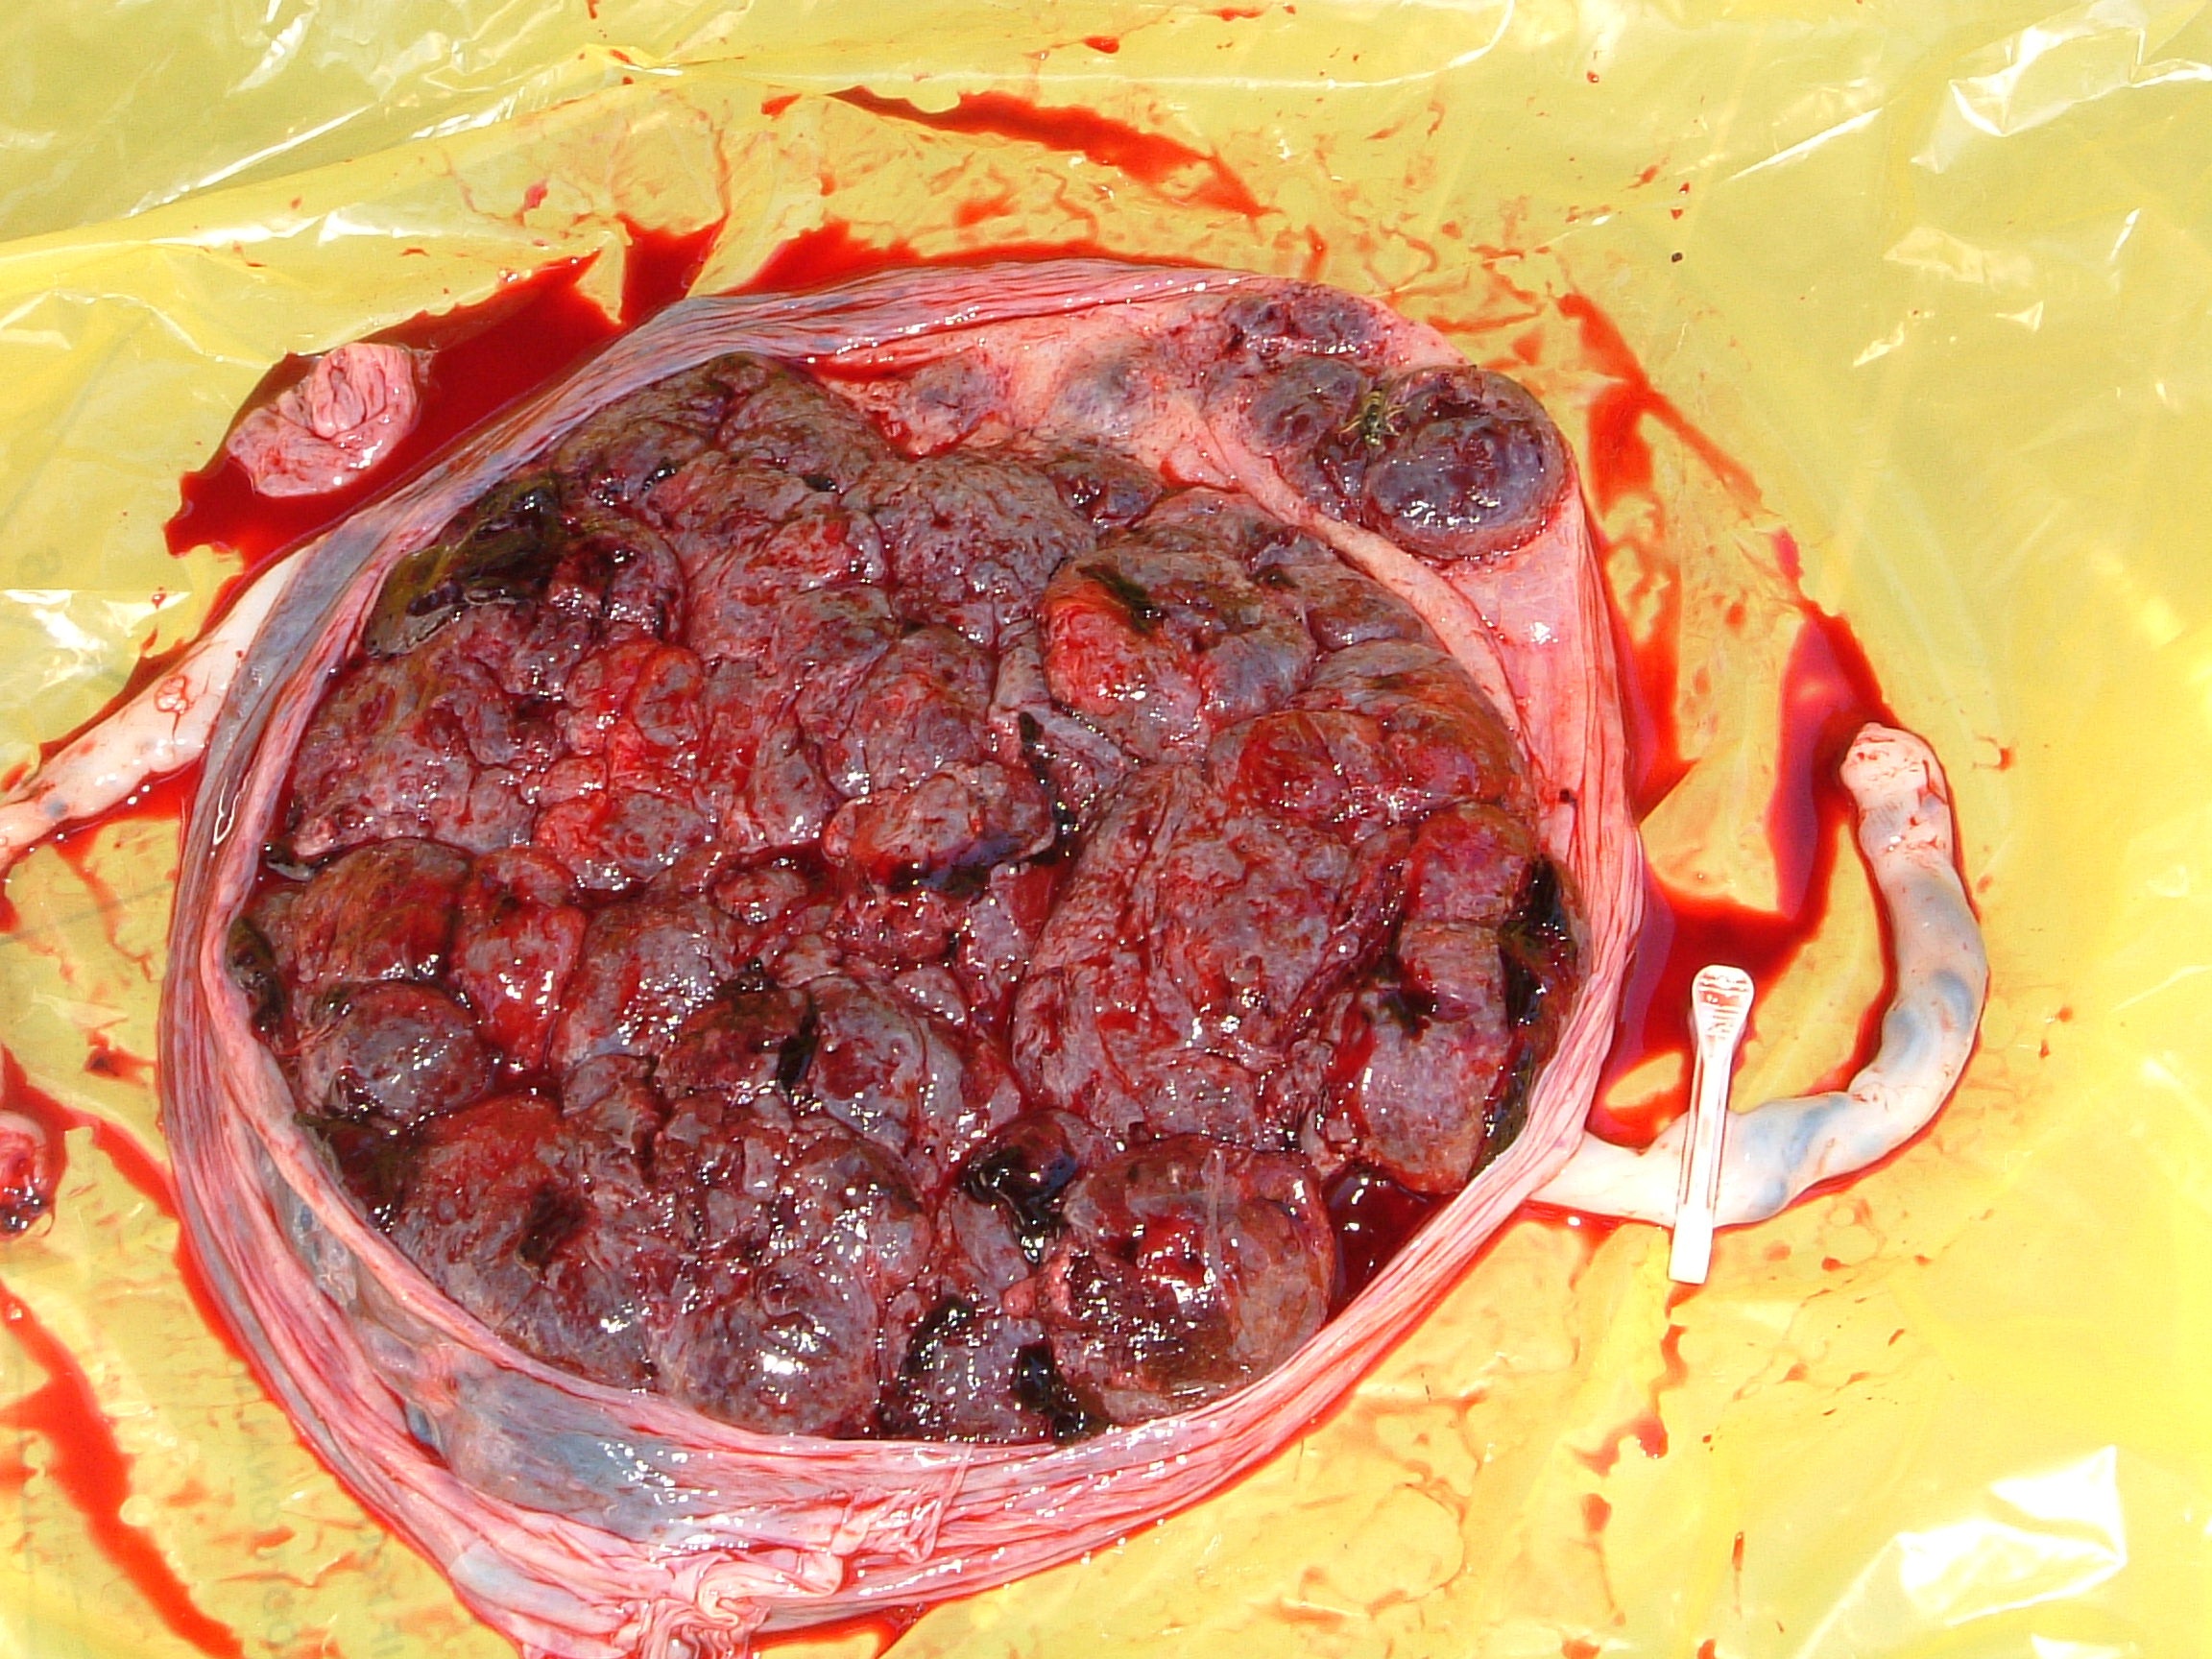 http://midwifemuse.files.wordpress.com/2007/11/inside-a-placenta.jpg